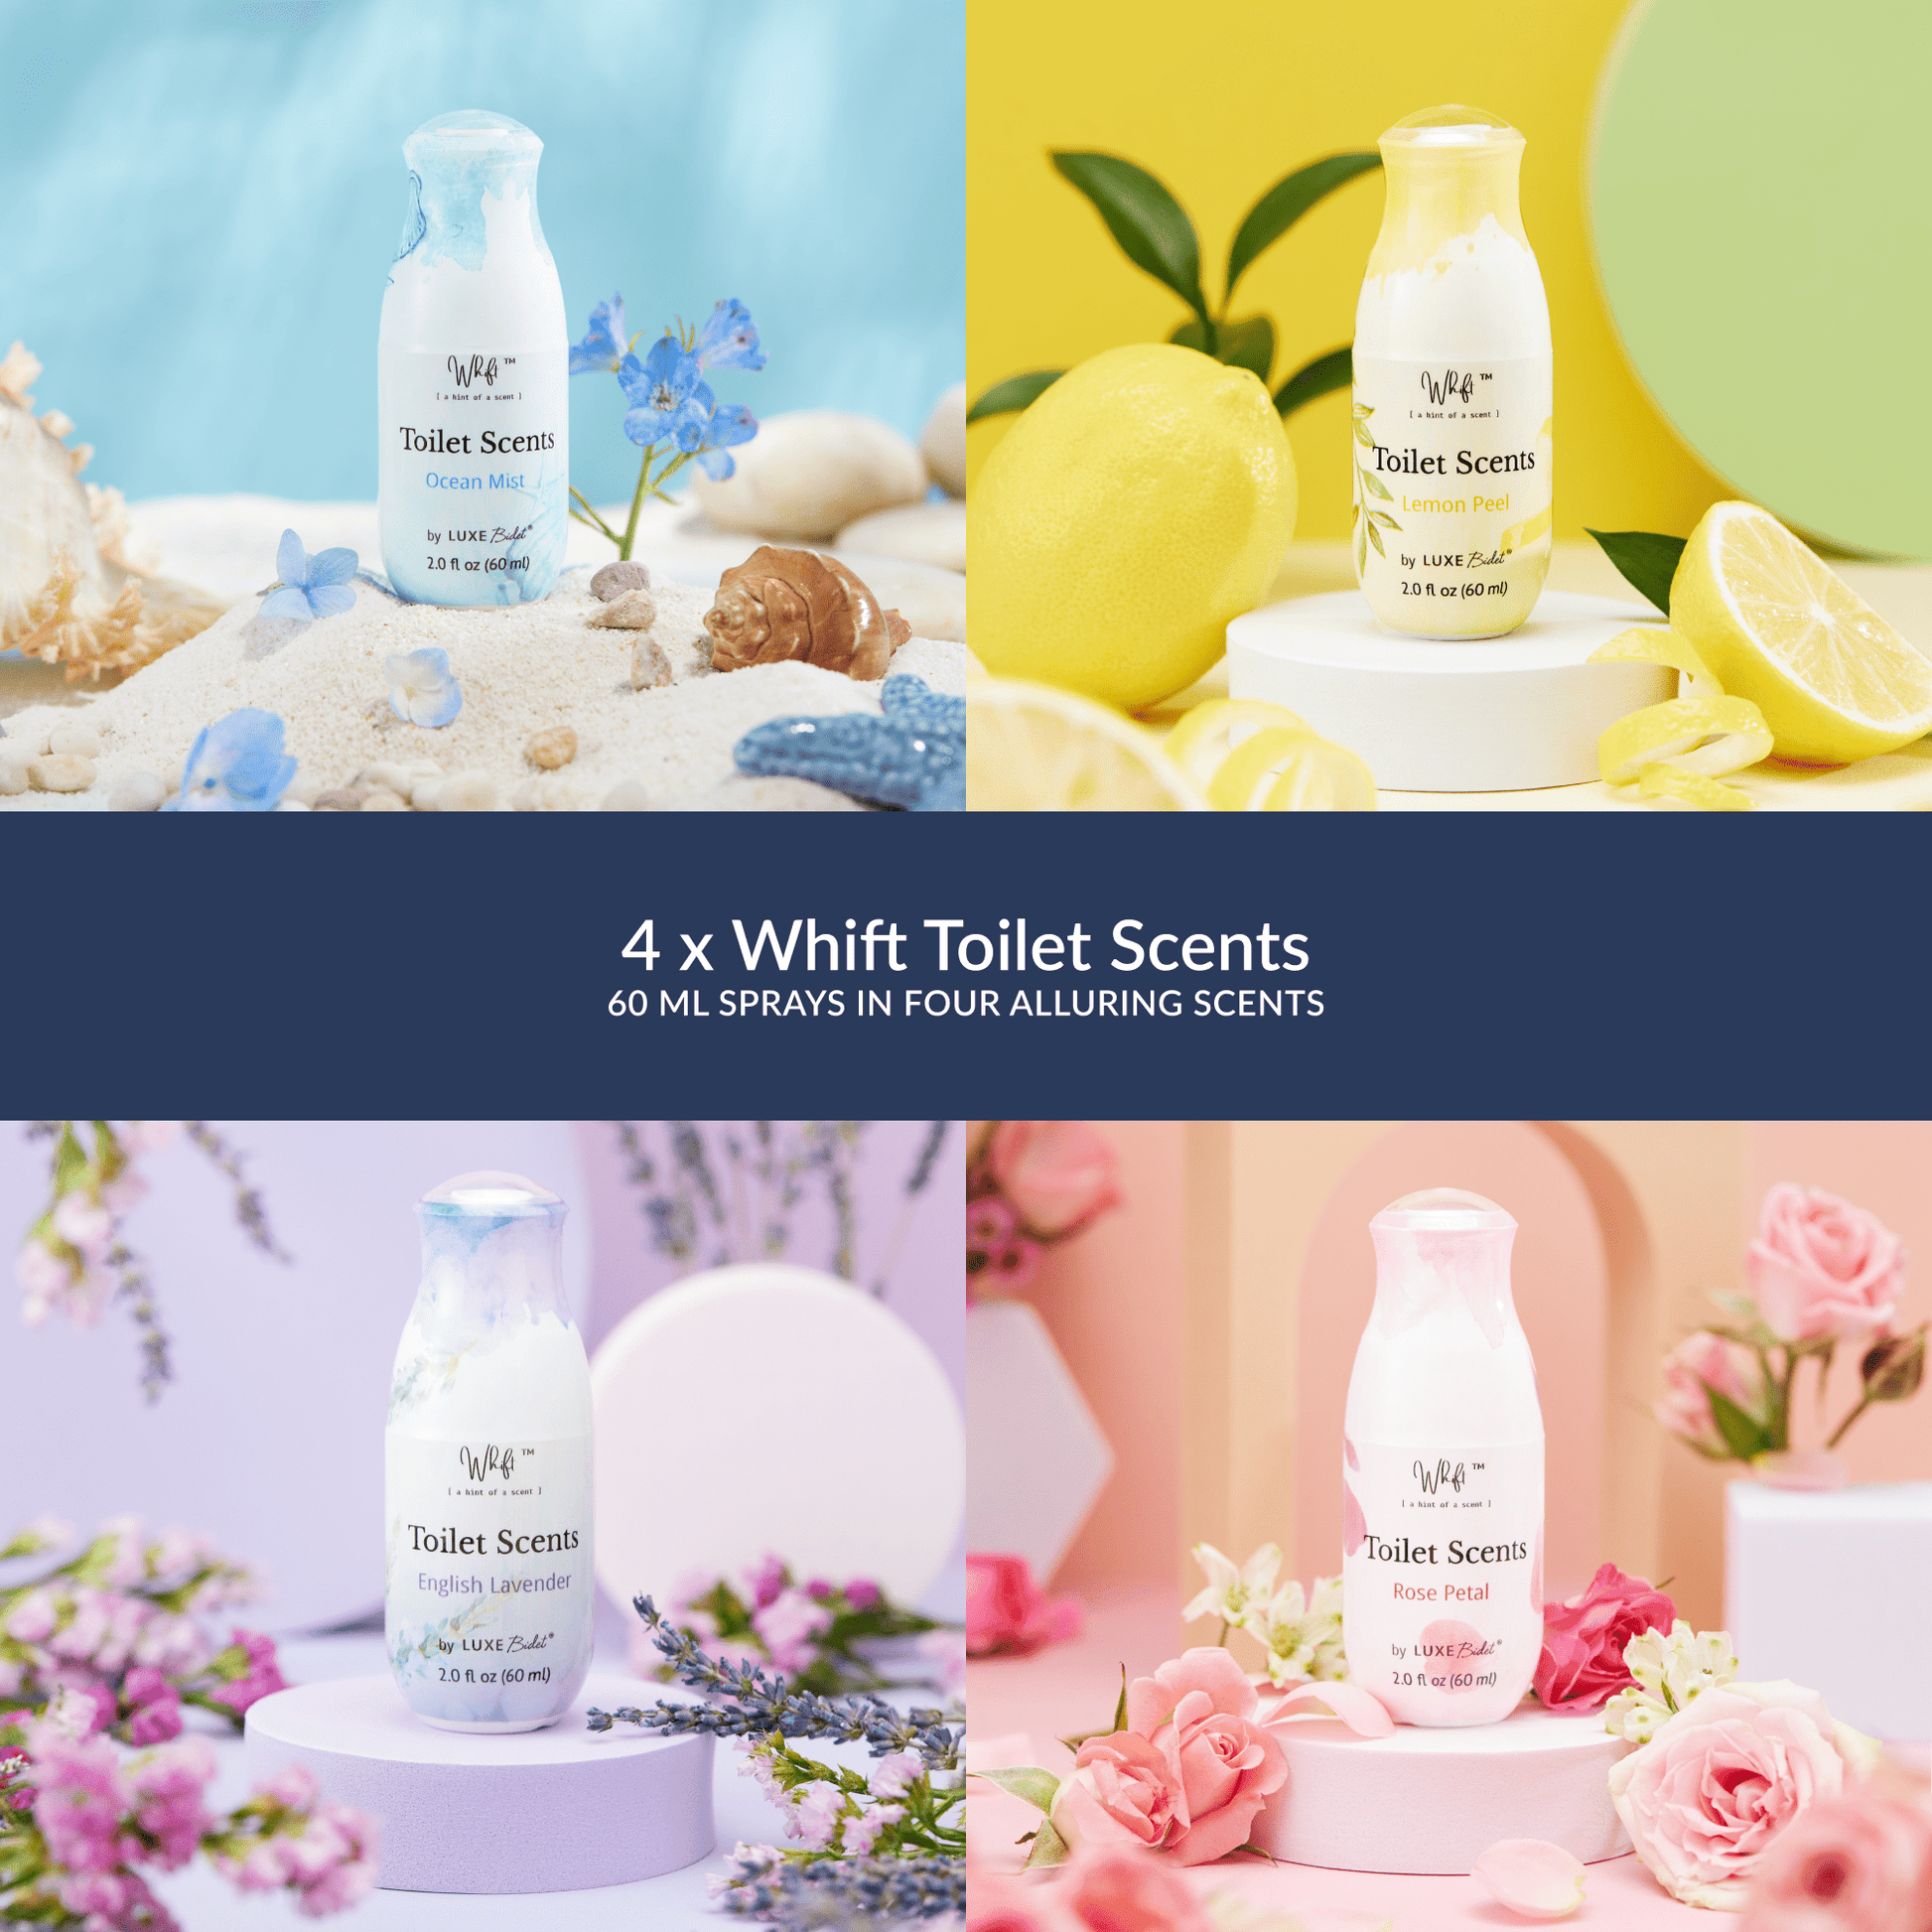 4 Whift Toilet Scents (60 mL Sprays) in Ocean Mist, Lemon Peel, English Lavender, and Rose Petal